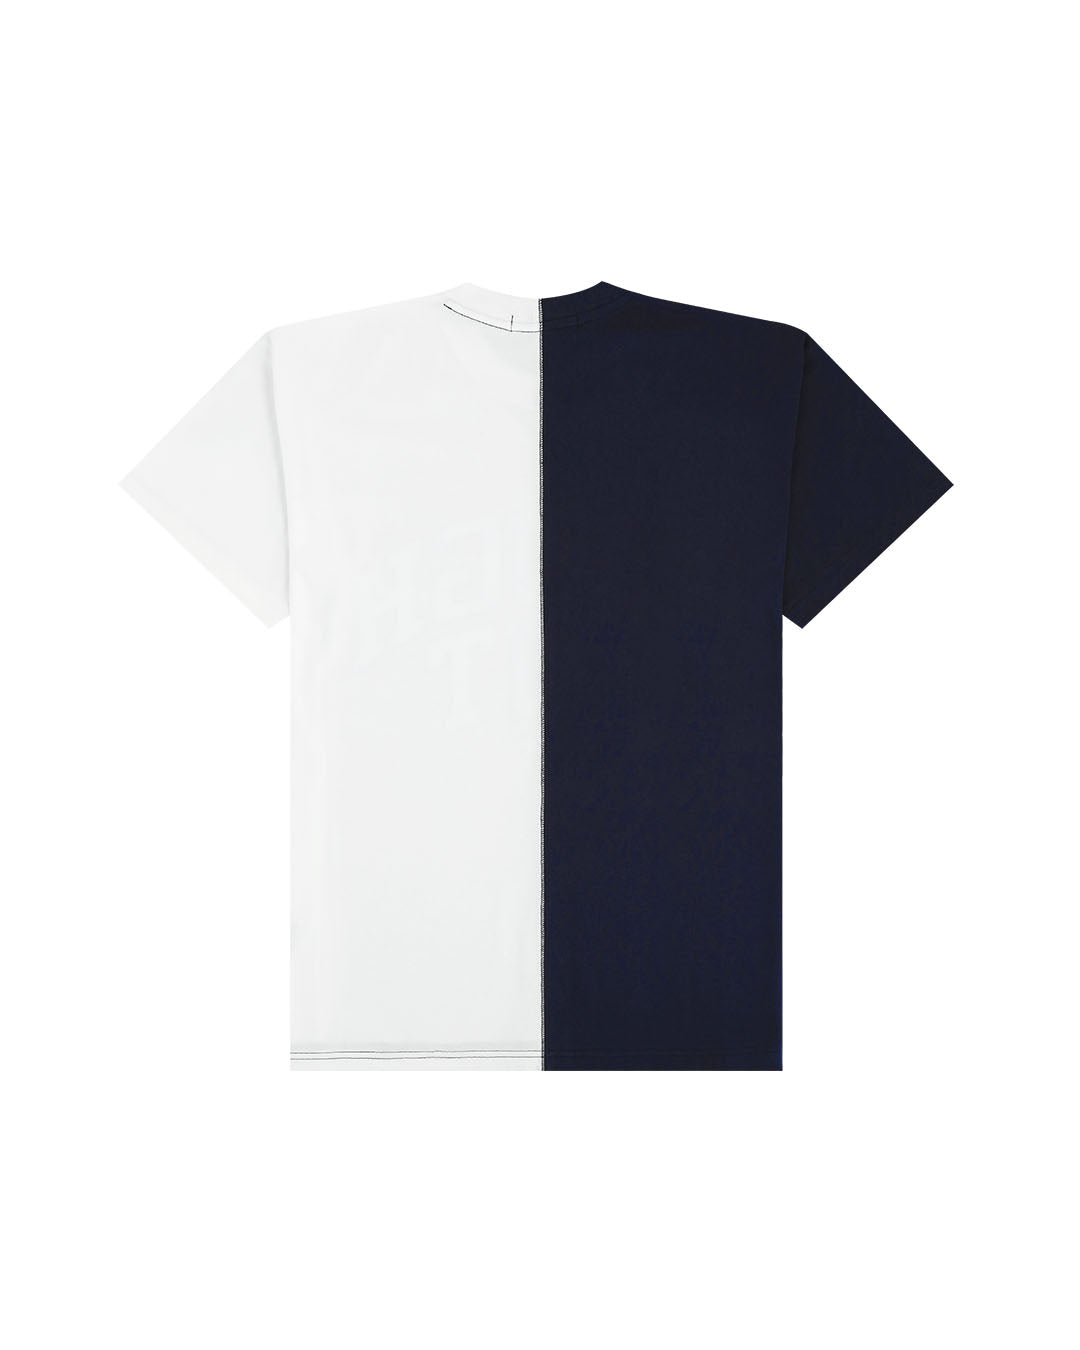 Half & Half T-Shirt / Navy